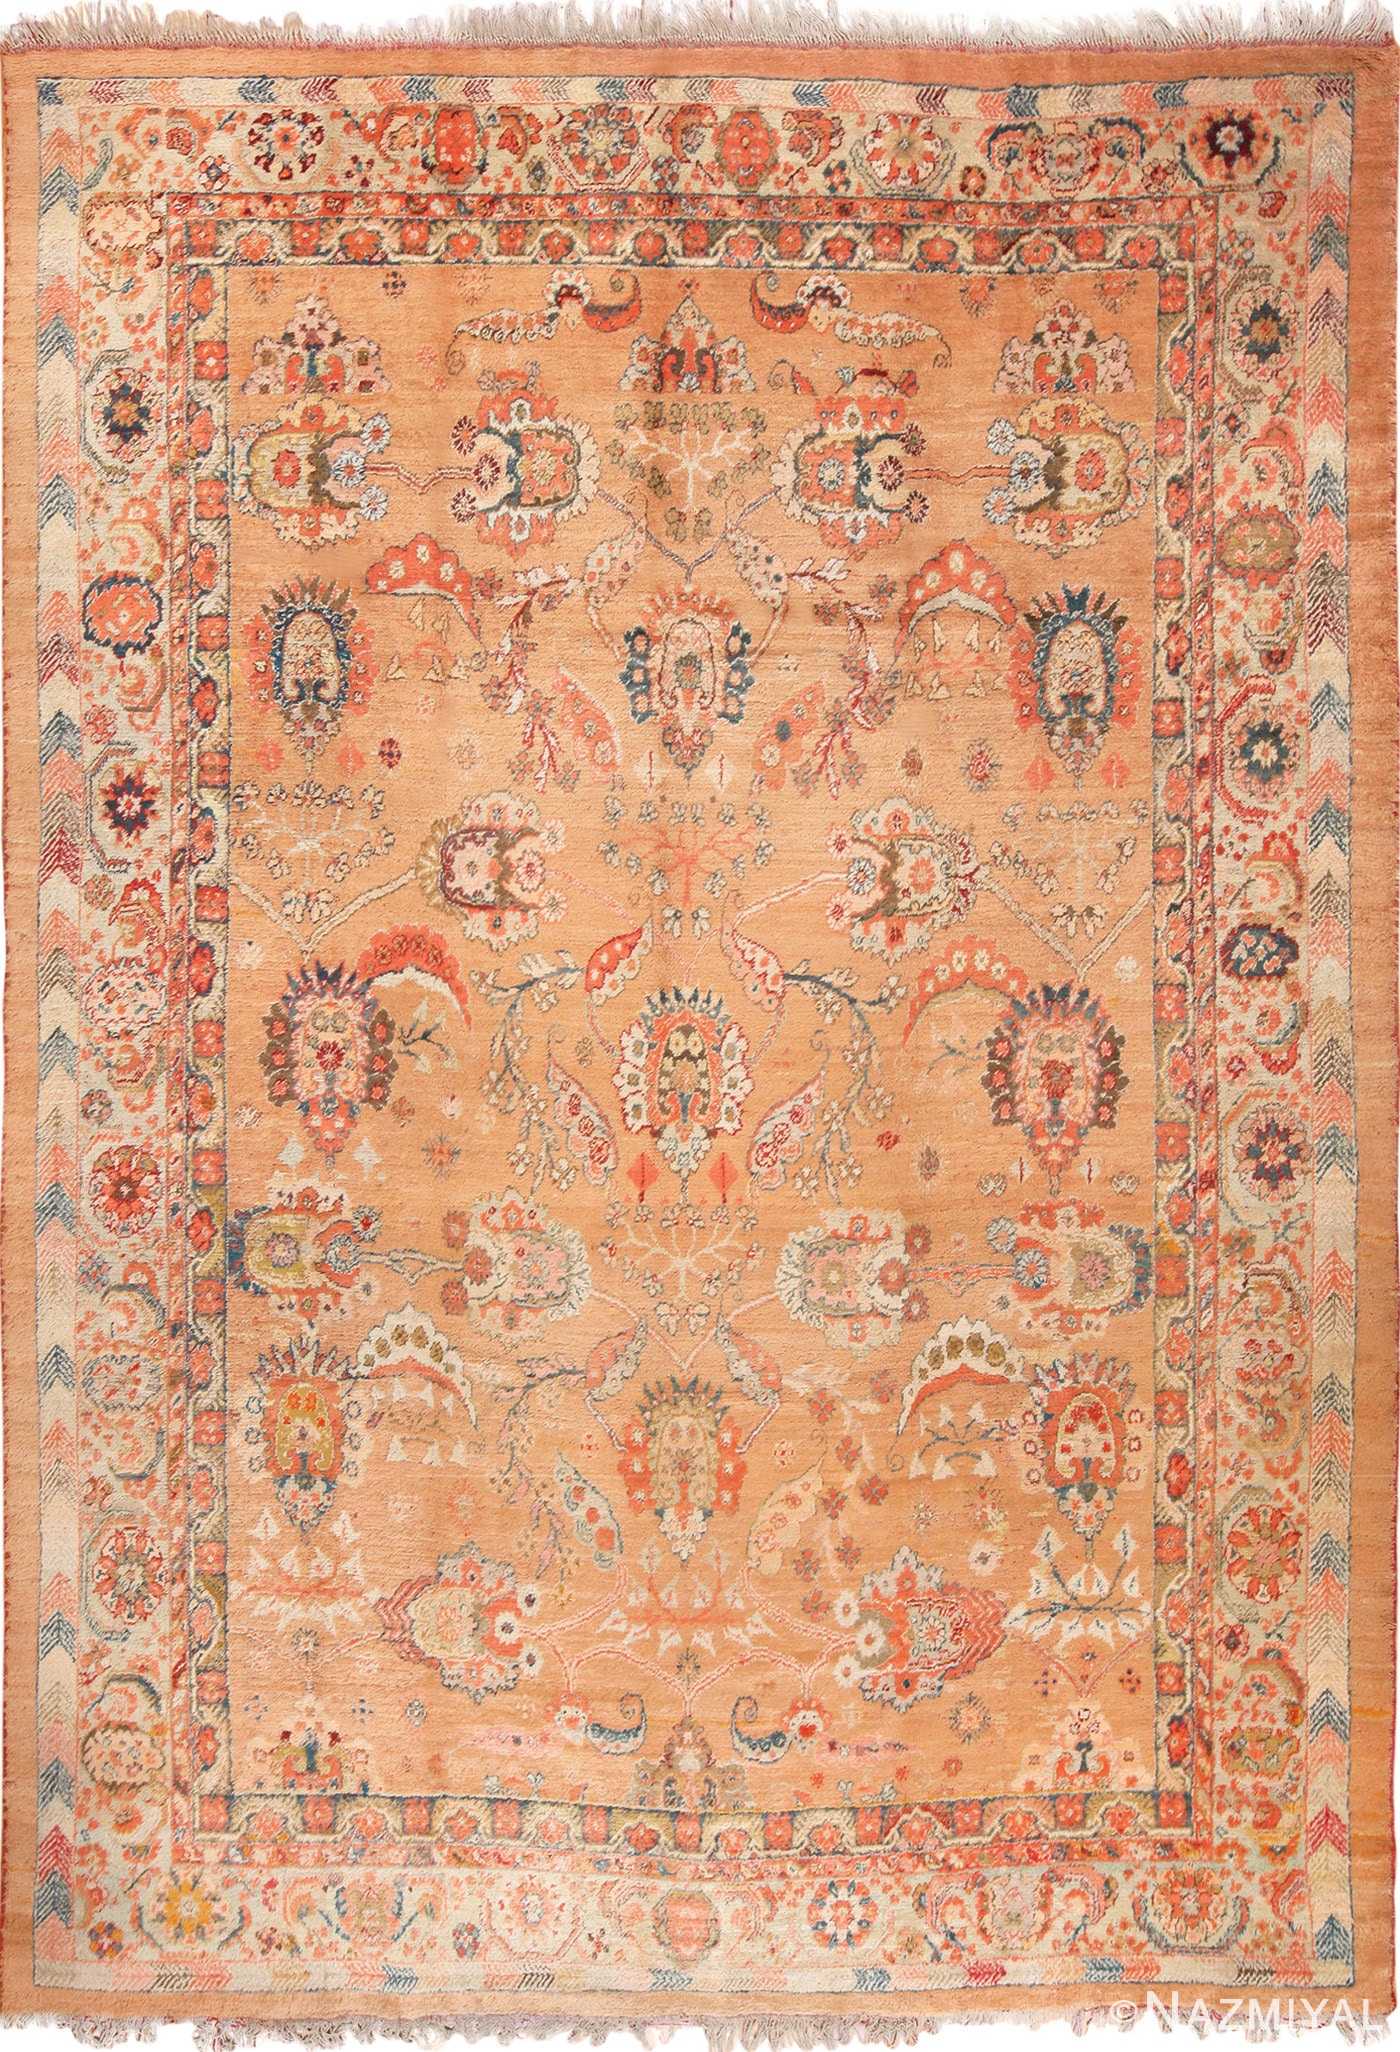 Full view antique Turkish Oushak Angora rug 70221 by Nazmiyal